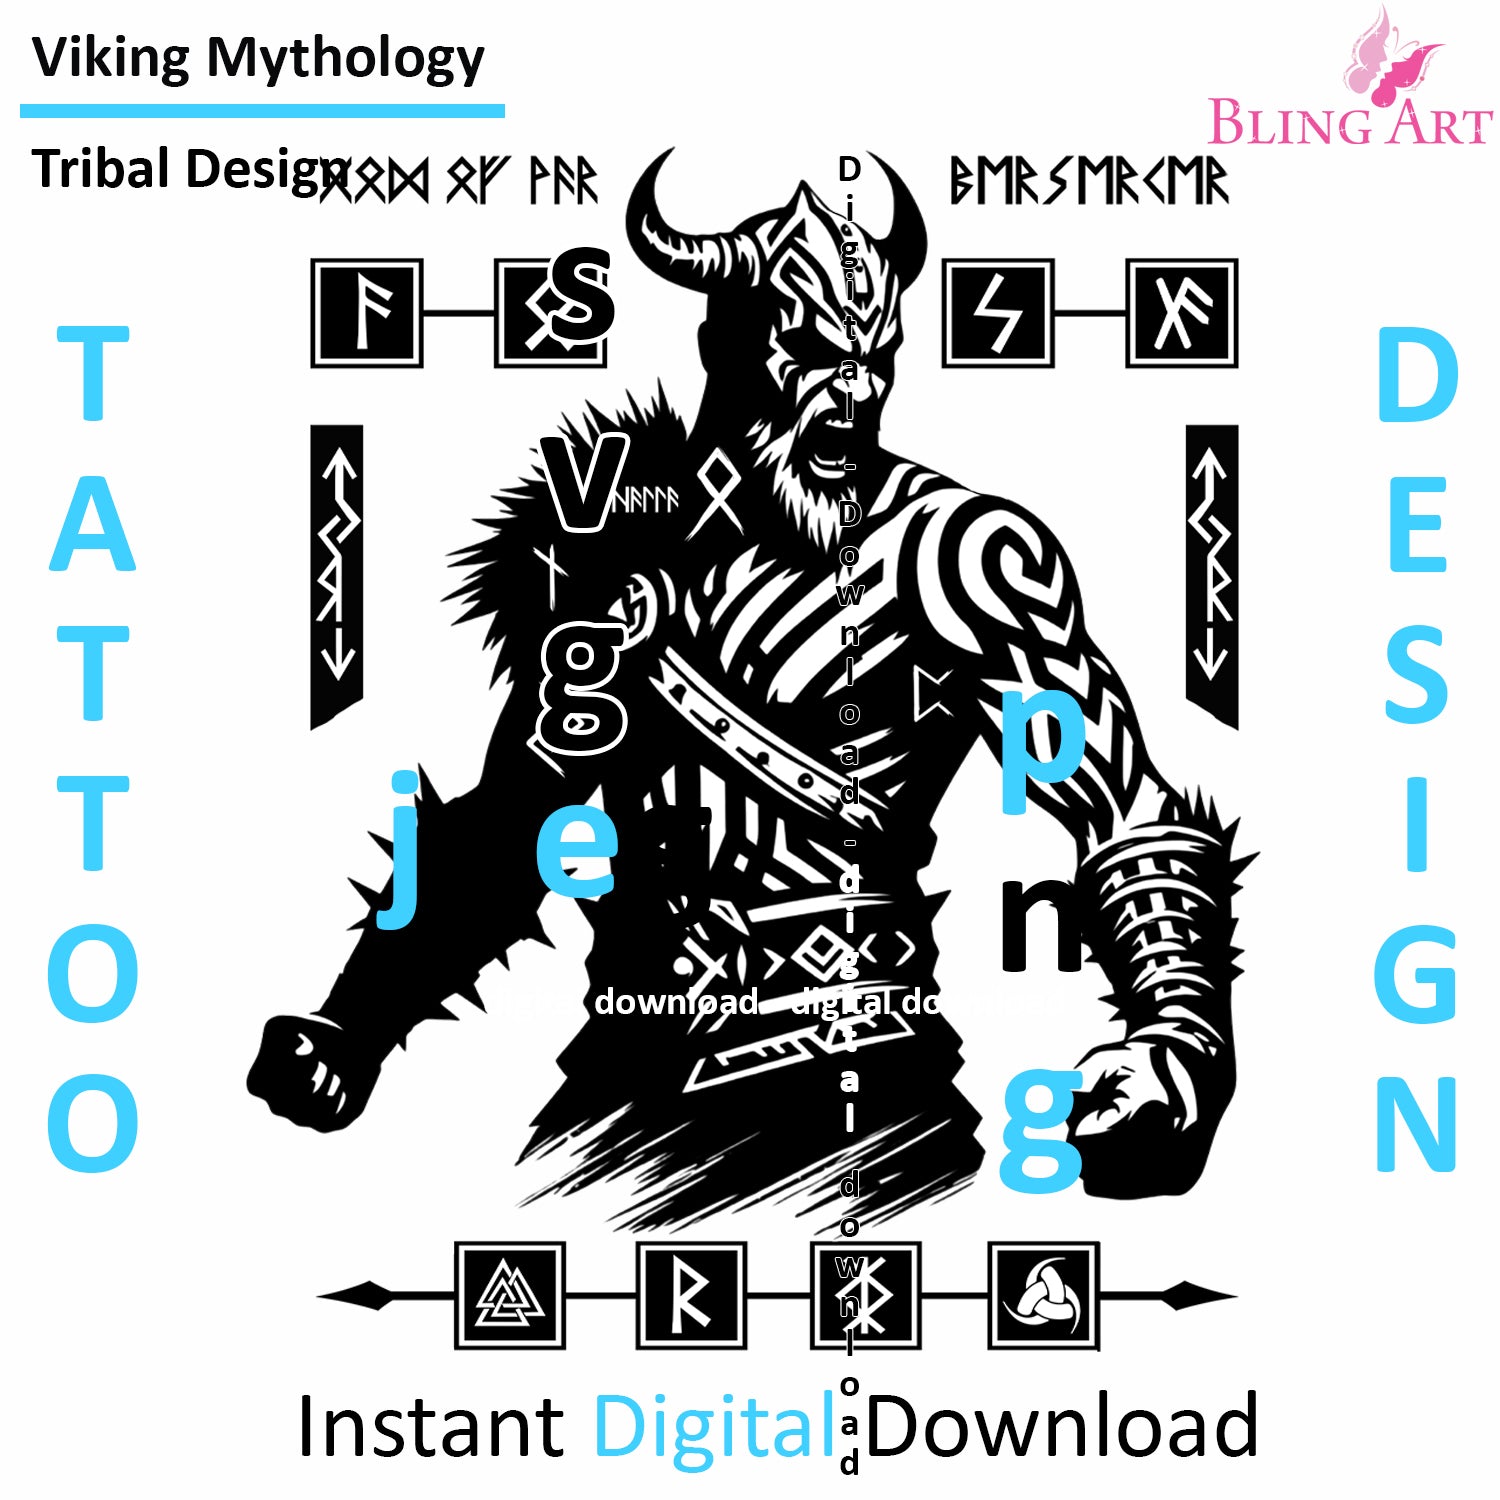 Viking God of War Tyr - Digital Design (PNG, JPEG, SVG) - Instant Download for Tattoos, T-Shirts, Wall Art